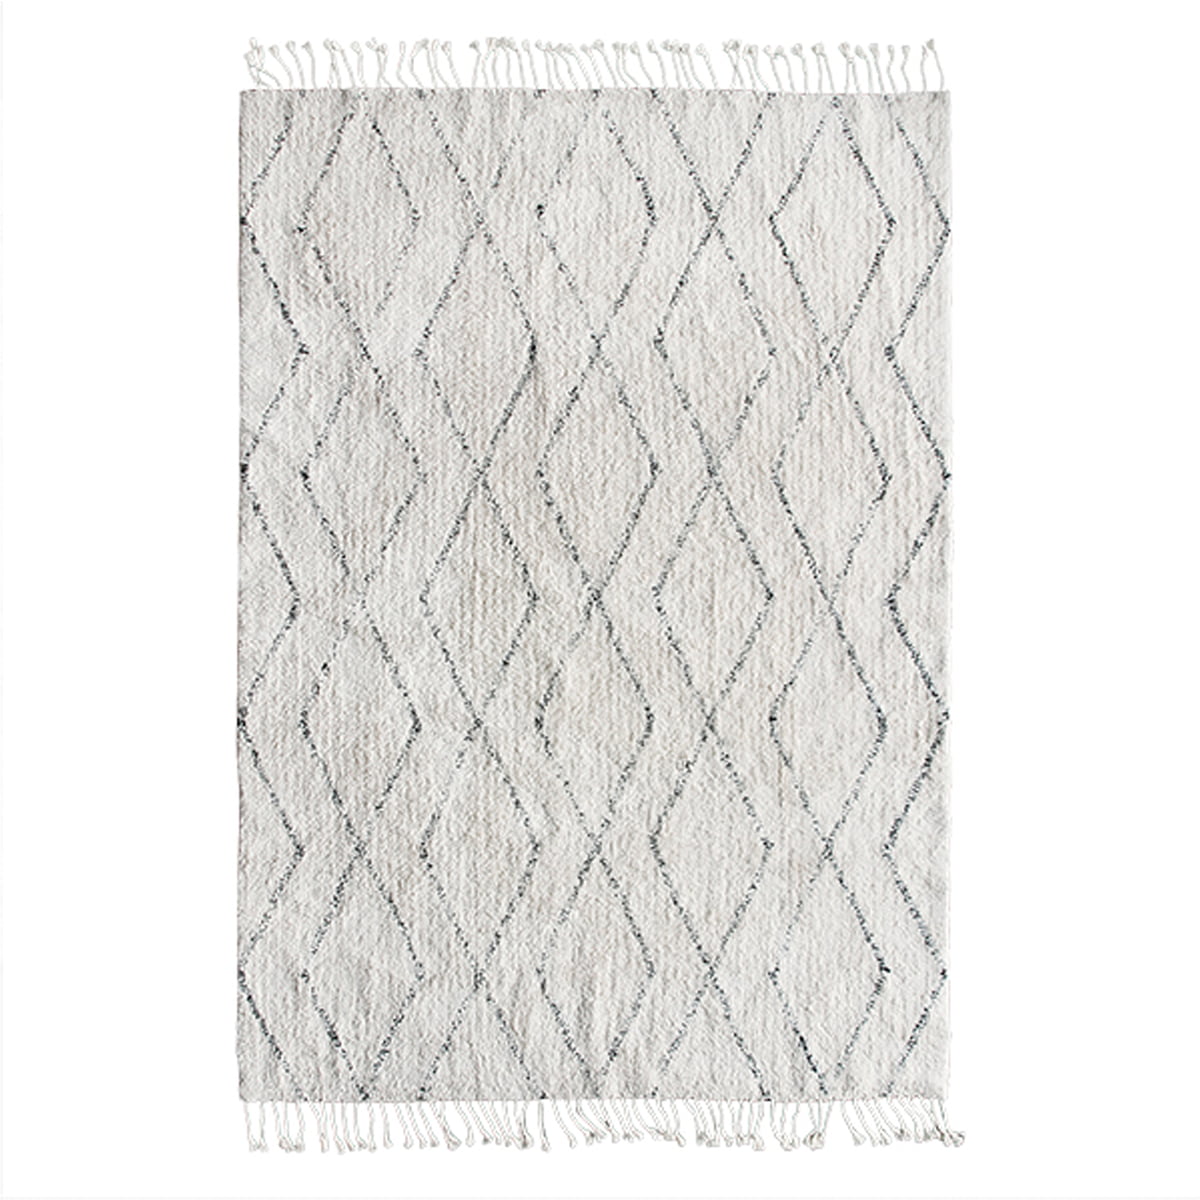 HKliving - Berber Teppich, 140 x 200 cm, weiß / schwarz